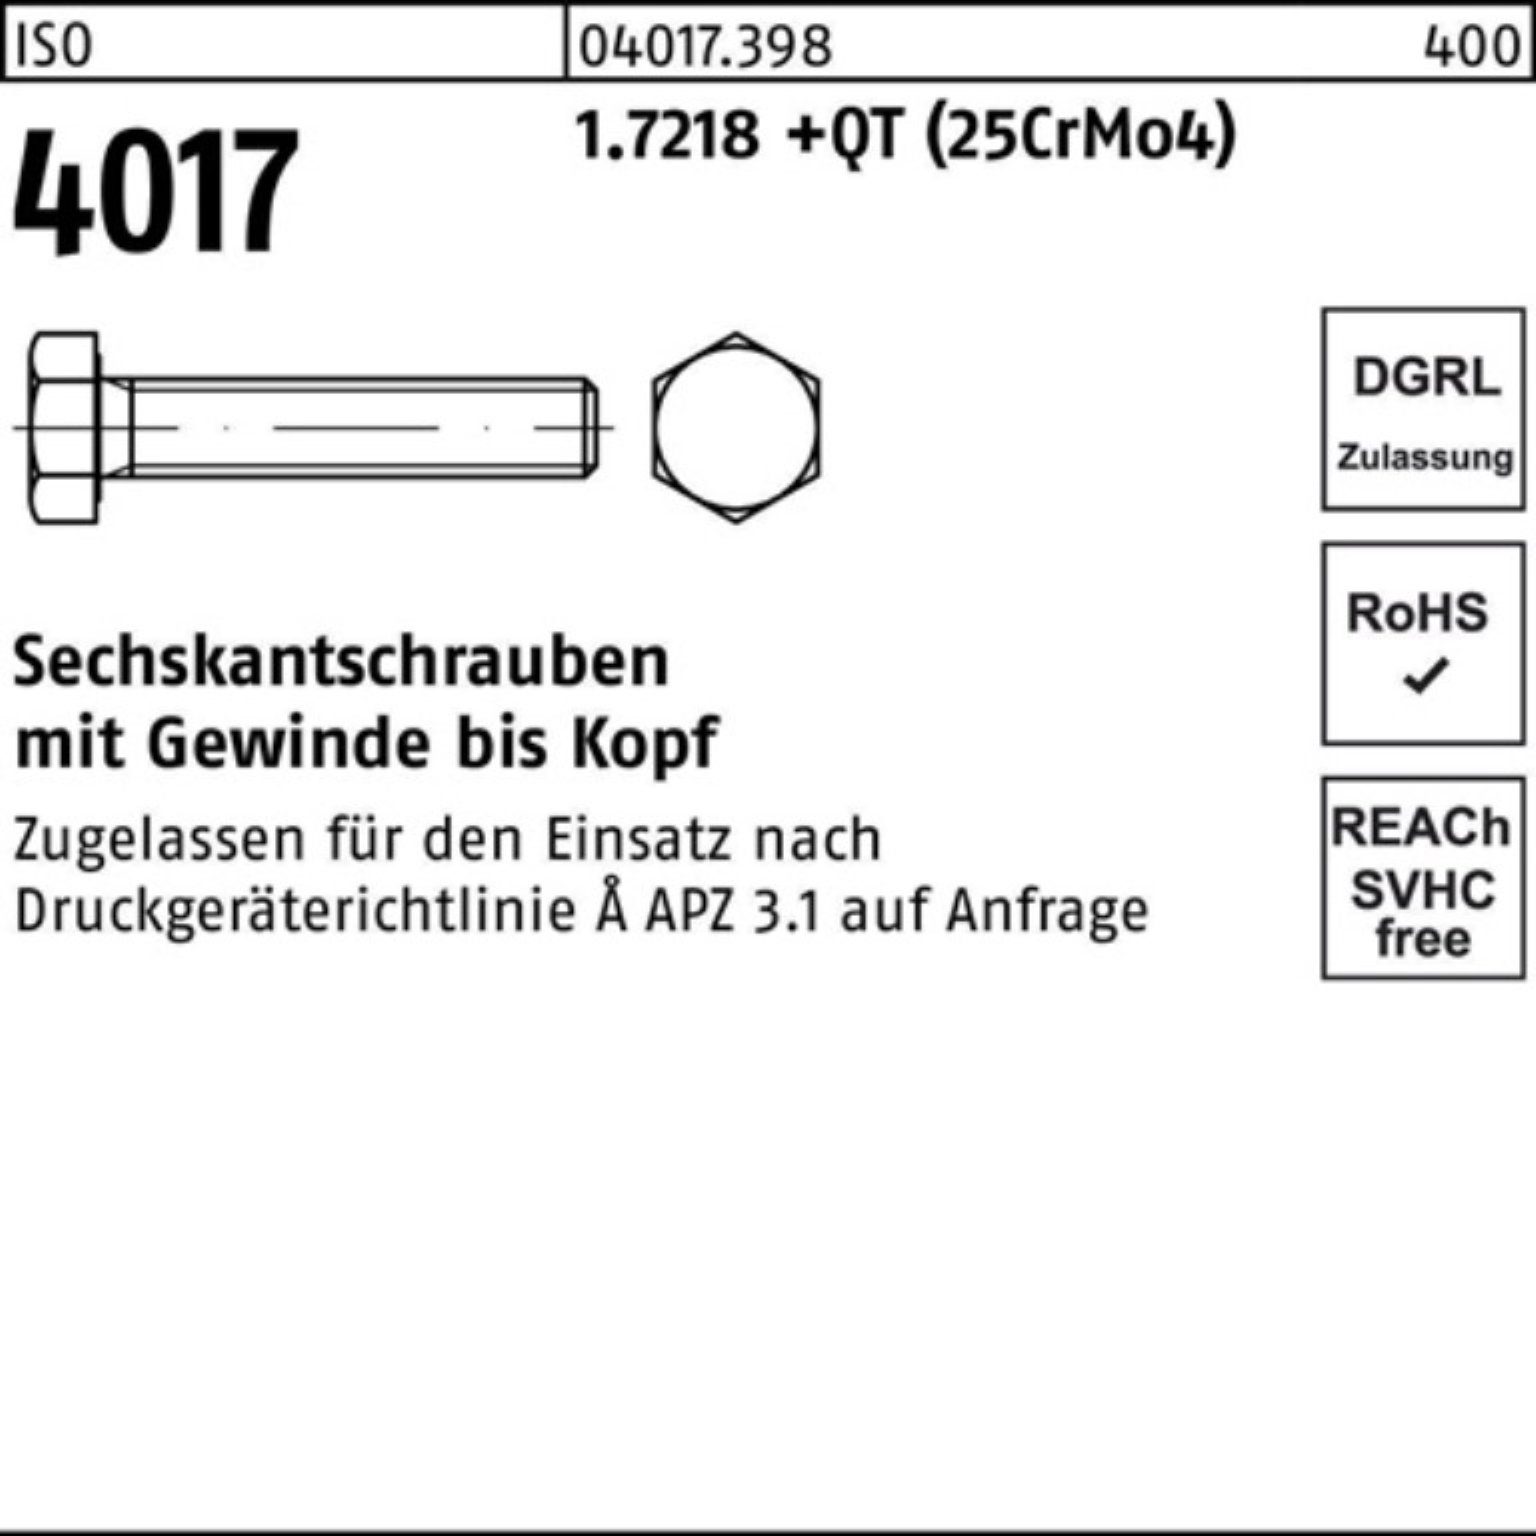 Bufab Sechskantschraube 1.7218 (25CrMo4) 100er ISO 4017 M30x VG Pack 120 +QT Sechskantschraube